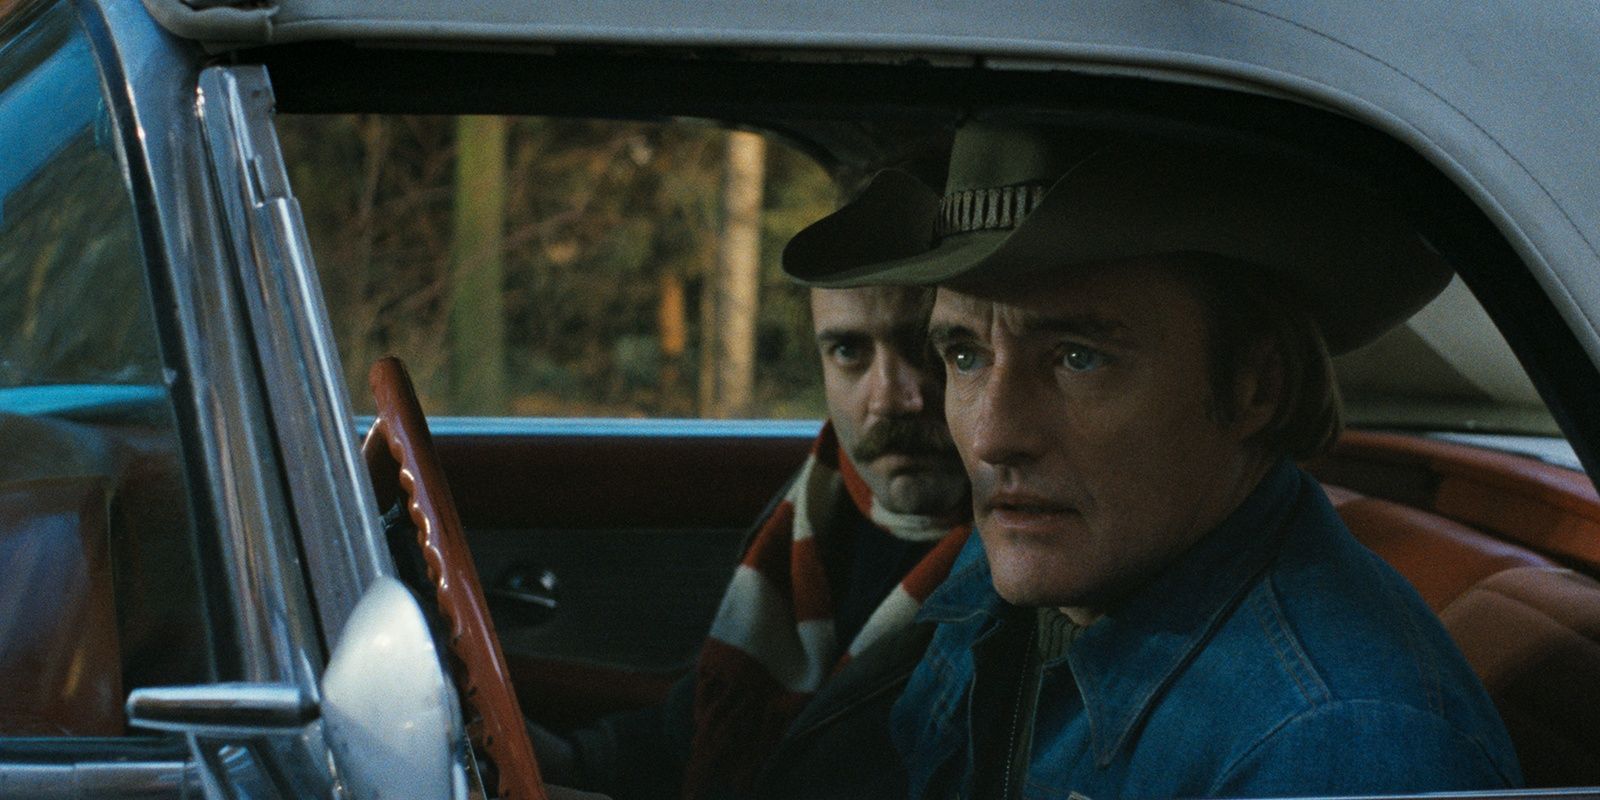 Bruno Ganz and Dennis Hopper sitting in a car in a still from The American Friend 